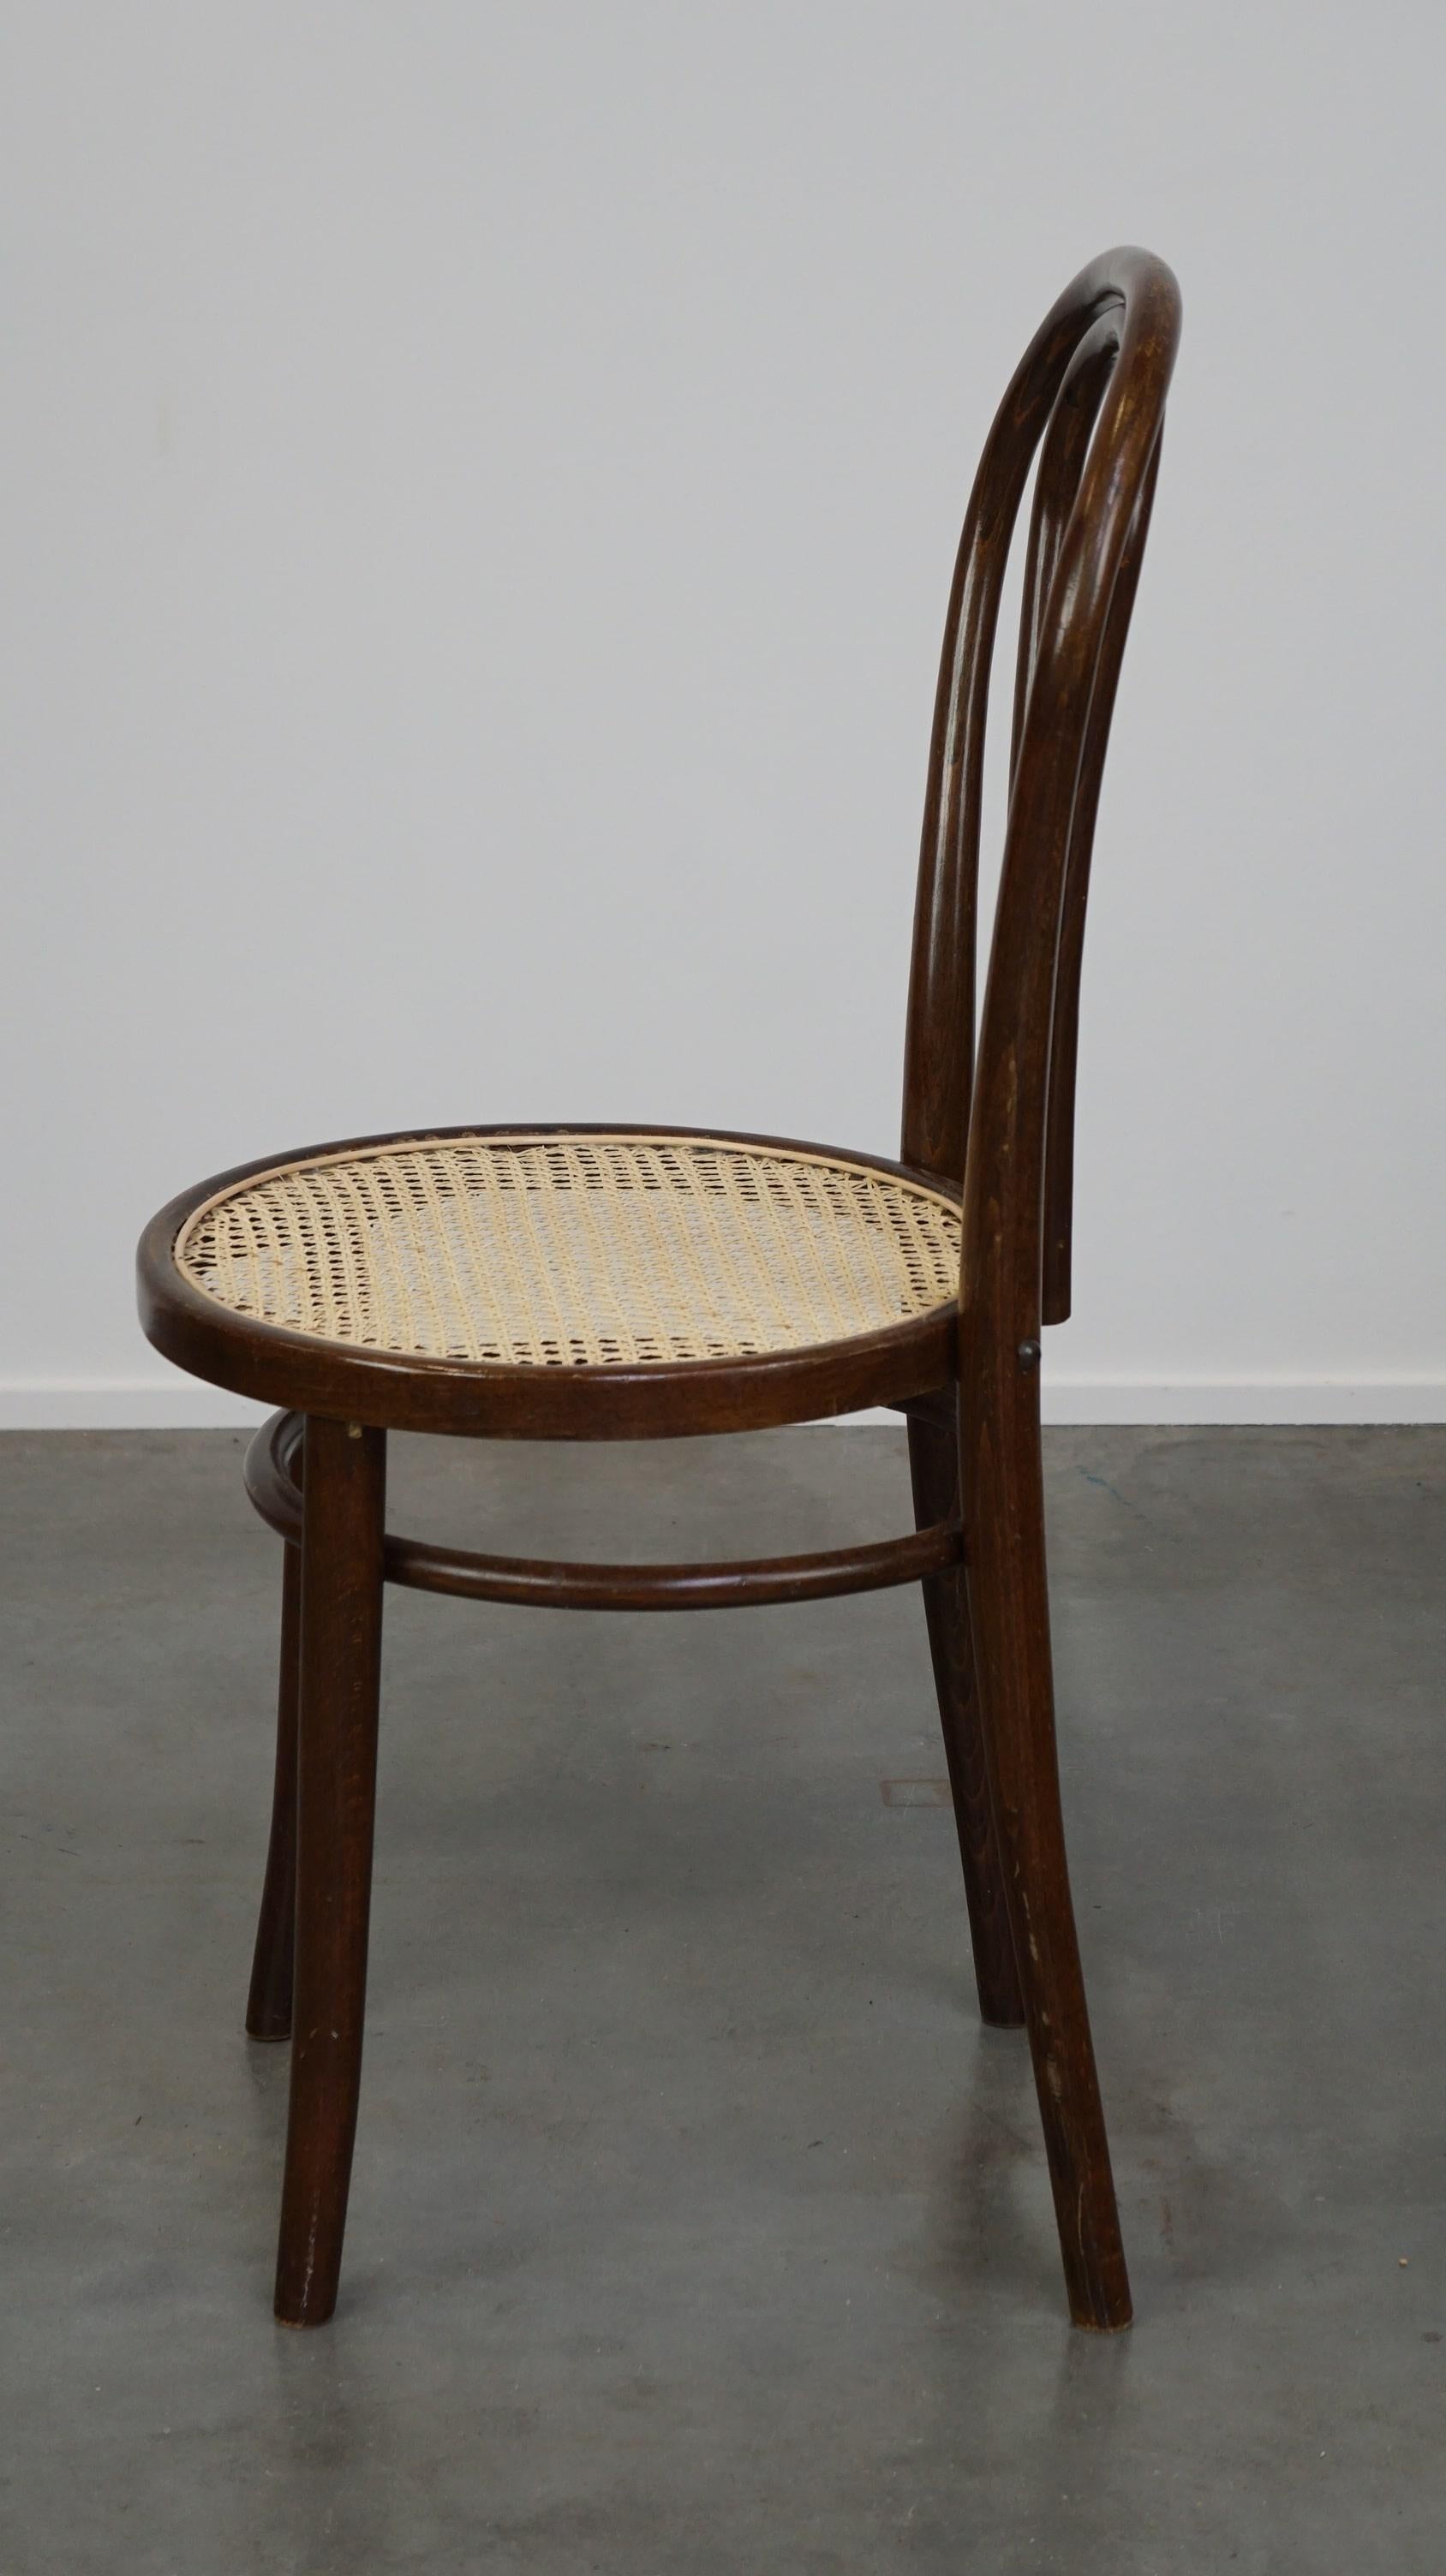 Originaler antiker Thonet-Stuhl aus gebogenem Holz, Modell Nr. 18, mit neuem geflochtenem Sitz (Korbweide) im Angebot